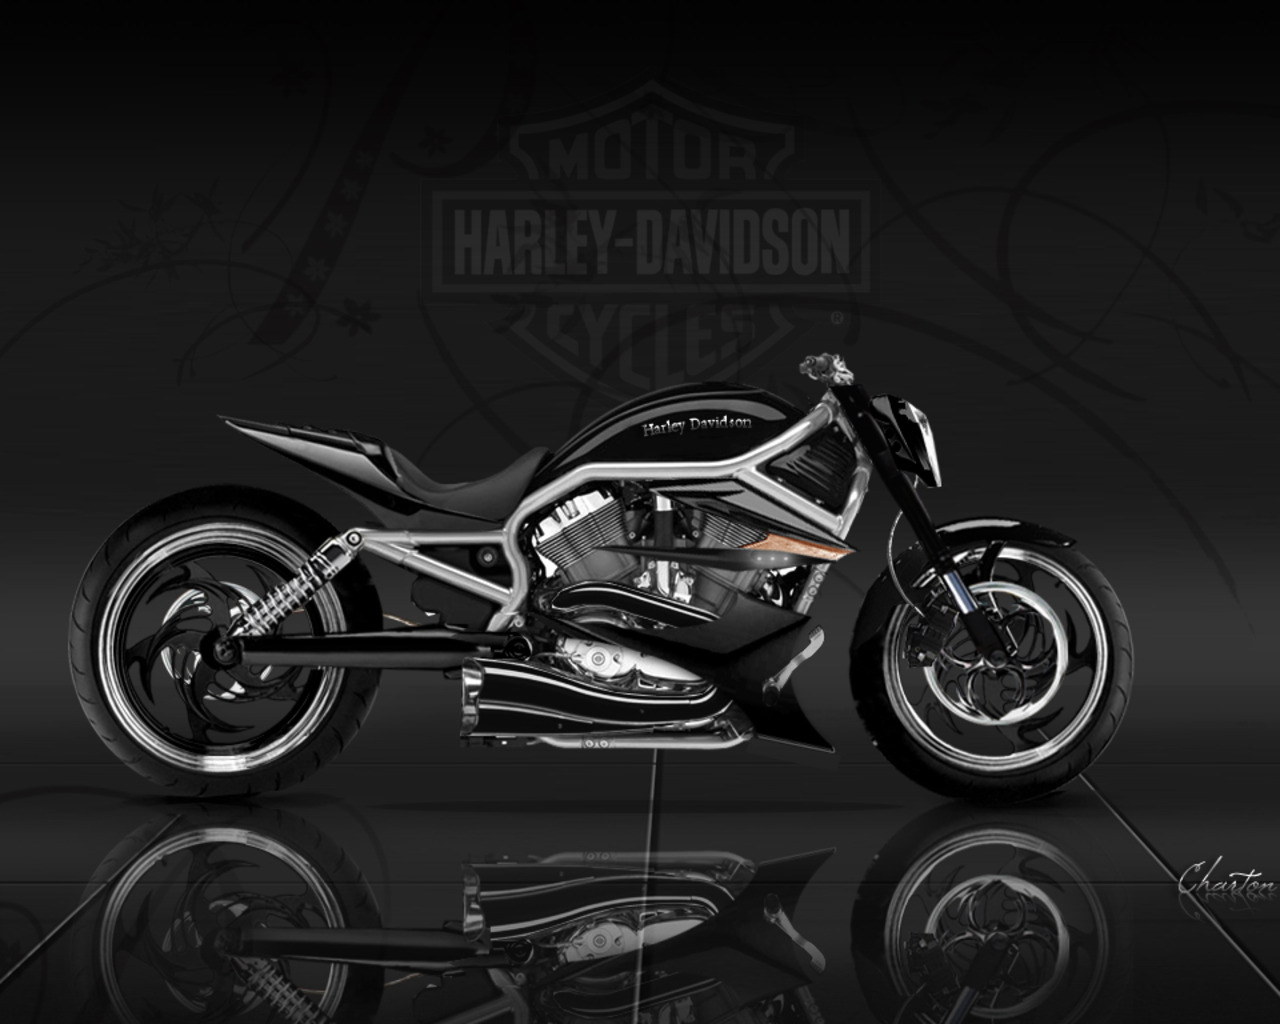 Harley Davidson Motorcycles Wallpaper Risen Sources